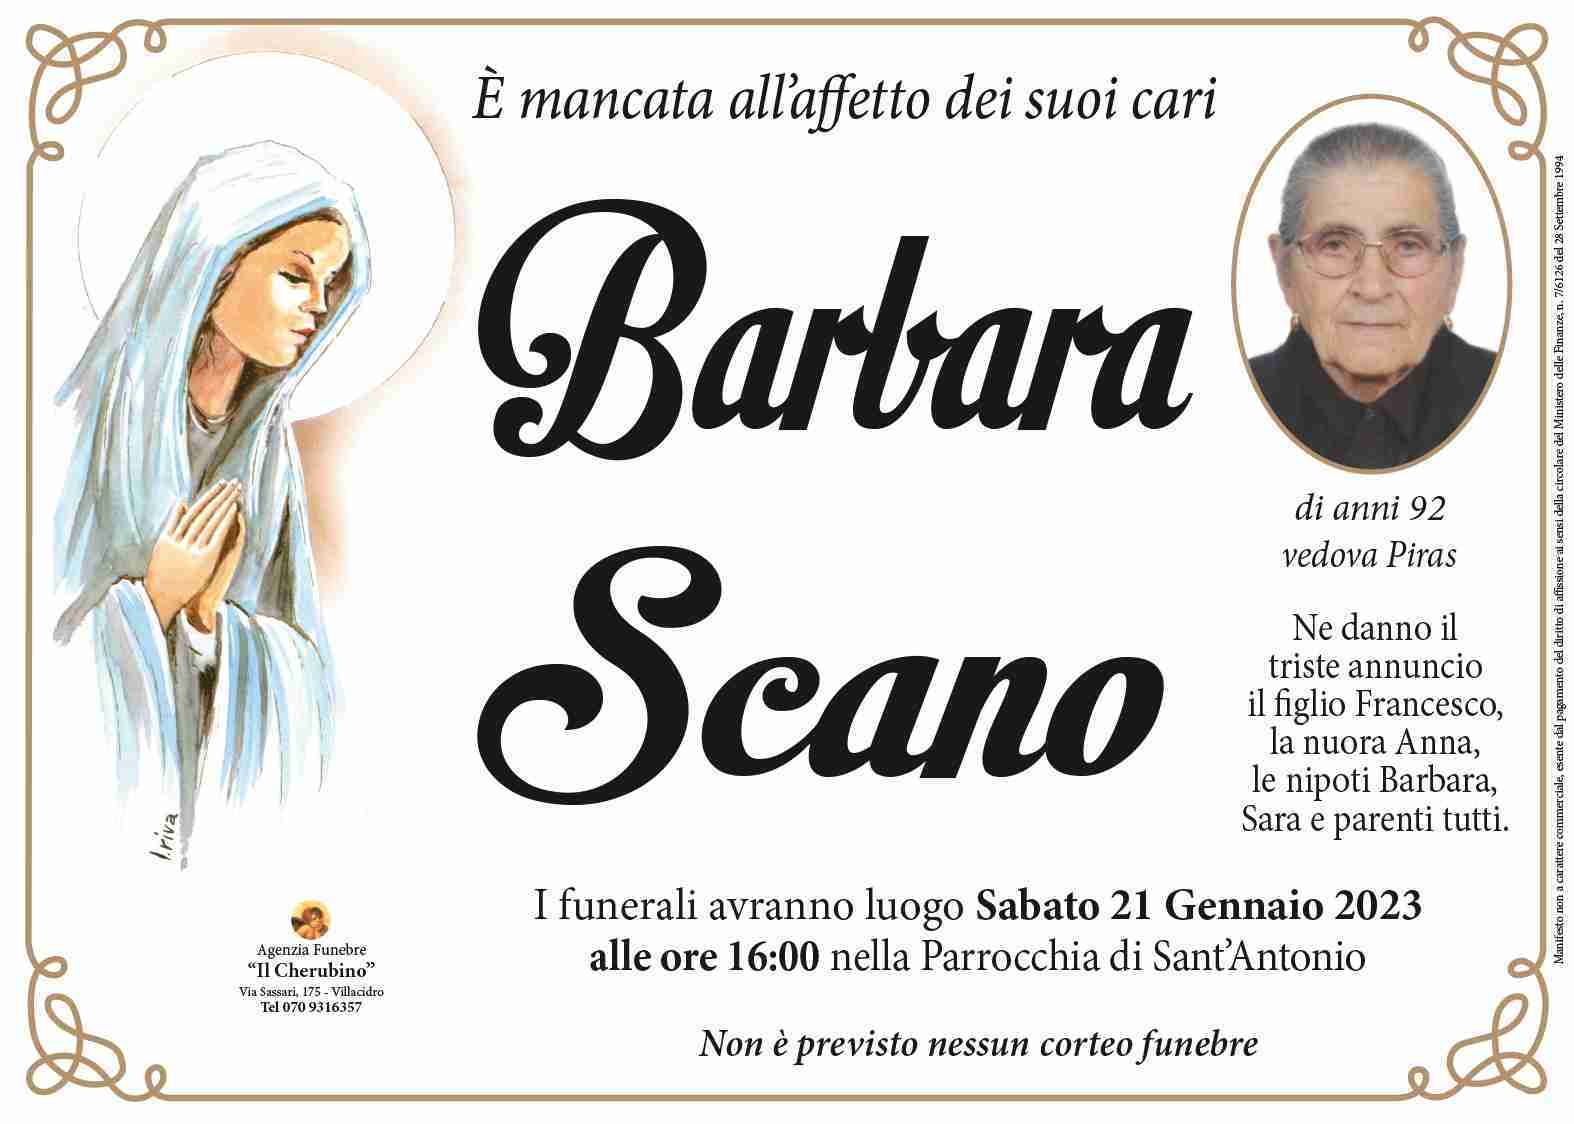 Barbara Scano